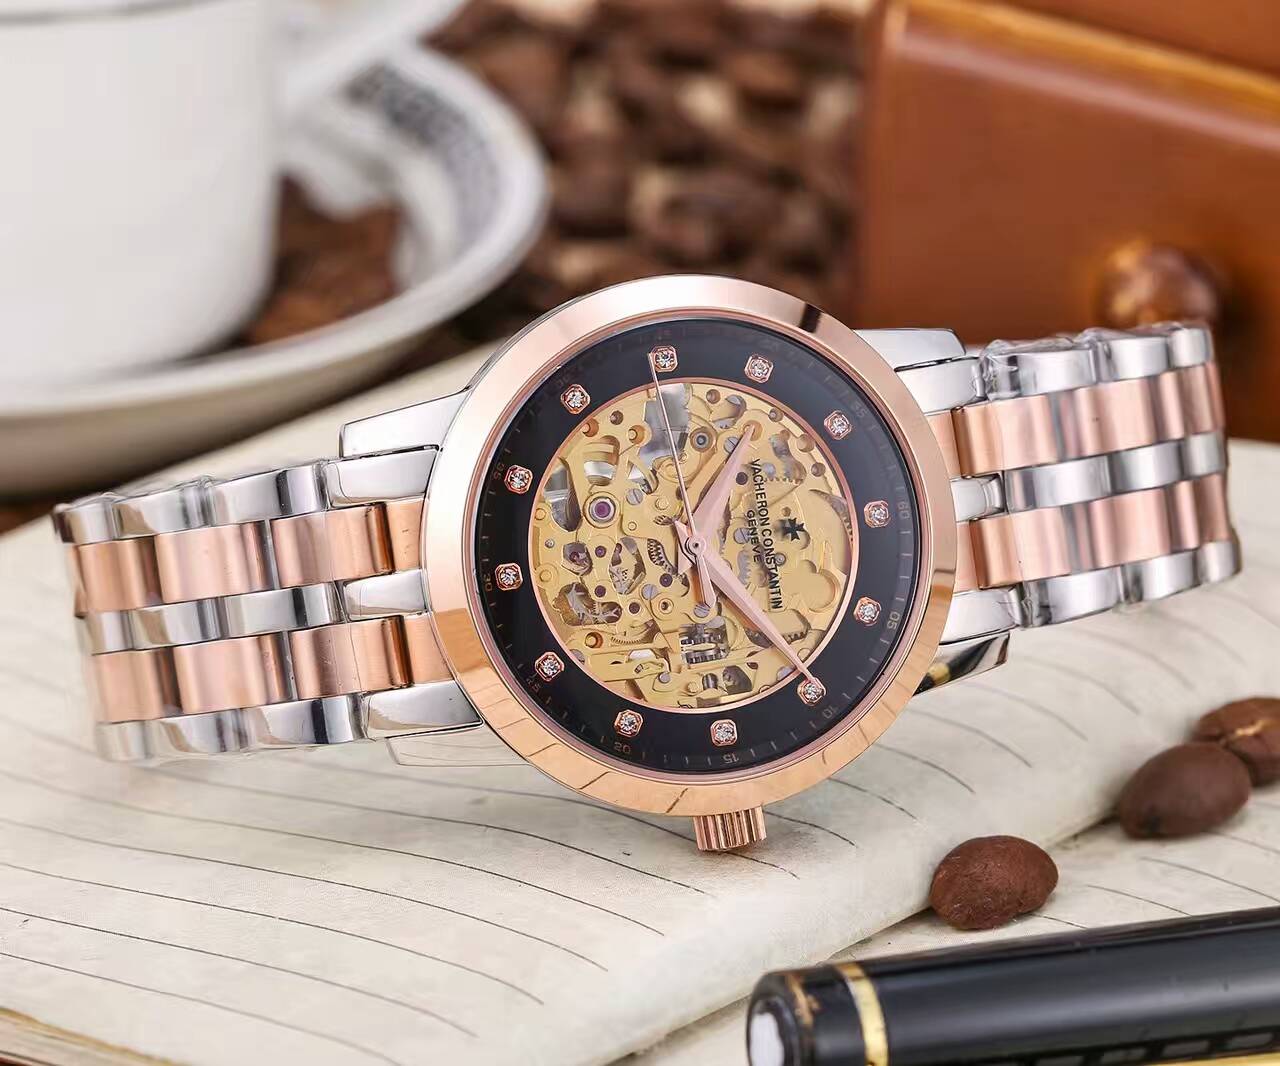 3A江詩丹頓 藍寶石水晶鏡面 頂級機械機芯 精鋼錶帶 尊貴不凡 風格經典 精品男士腕錶 